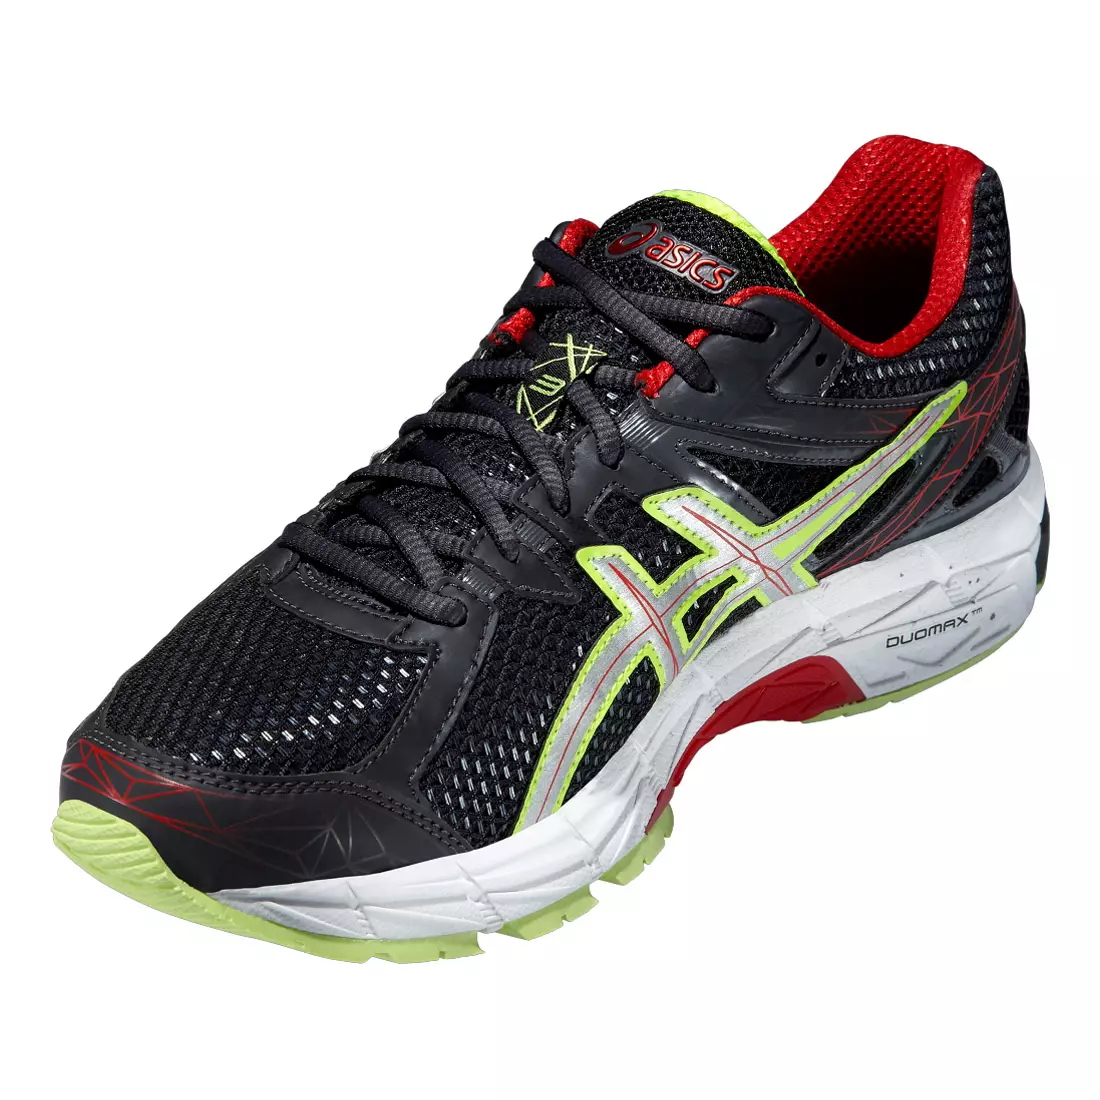 ASICS GT-1000 3 running shoes 9907